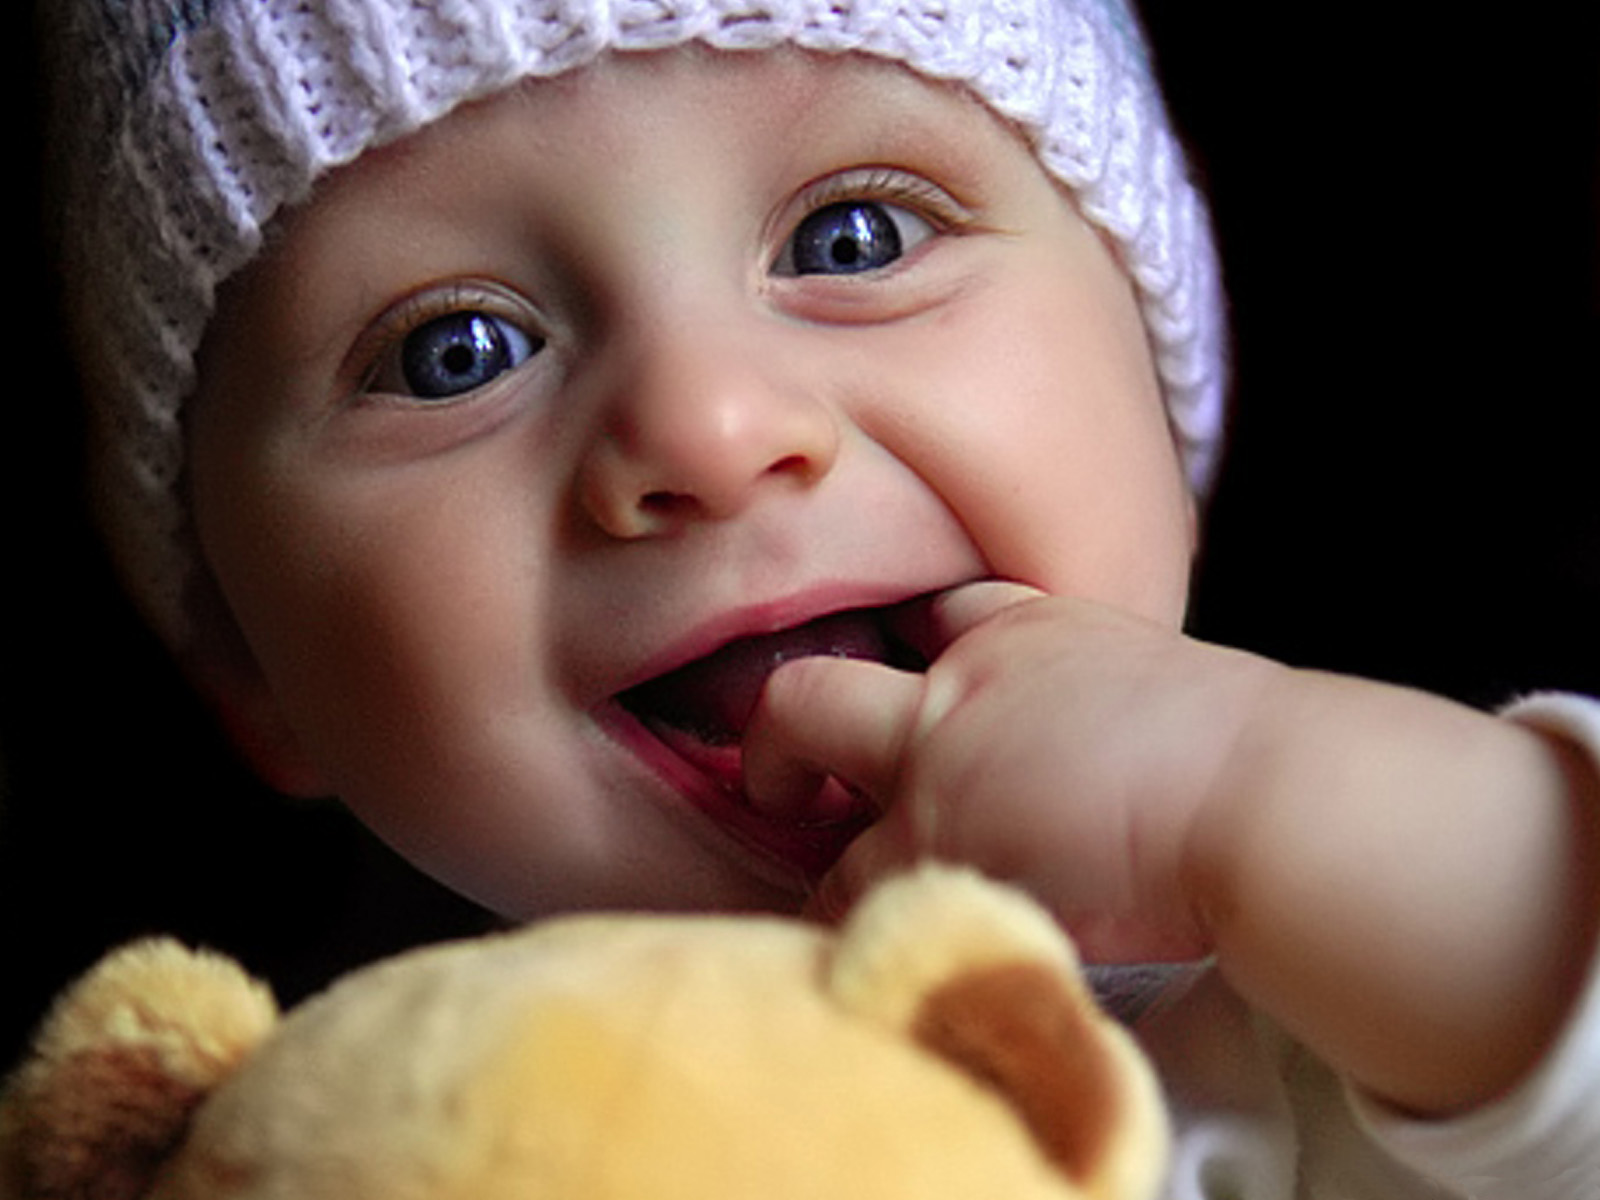 cute baby smile hd wallpapers new.jpg - Free hd wallpapers